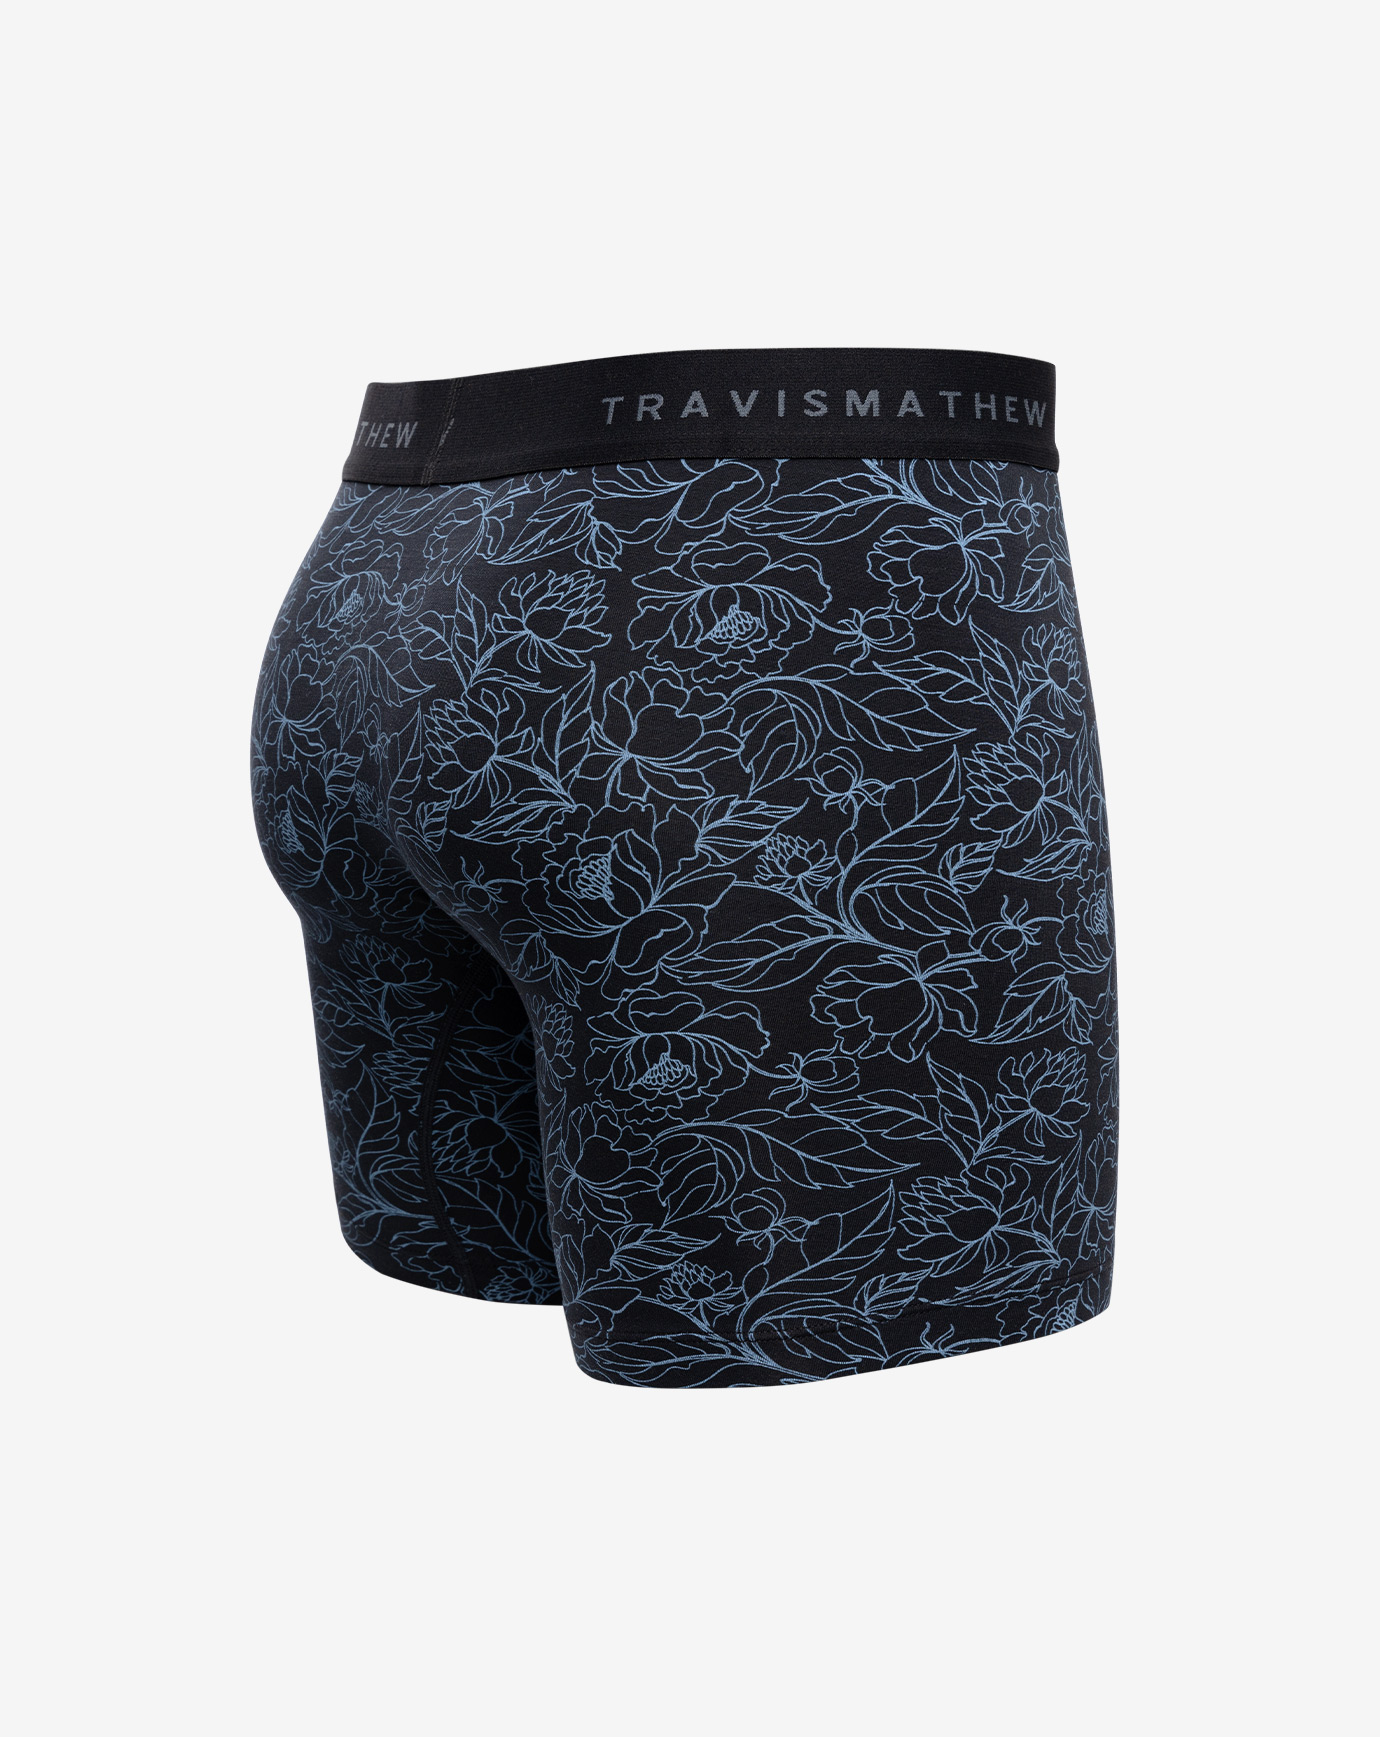 Loyal Background - Custom Photo Couple Boxer Briefs Underwear